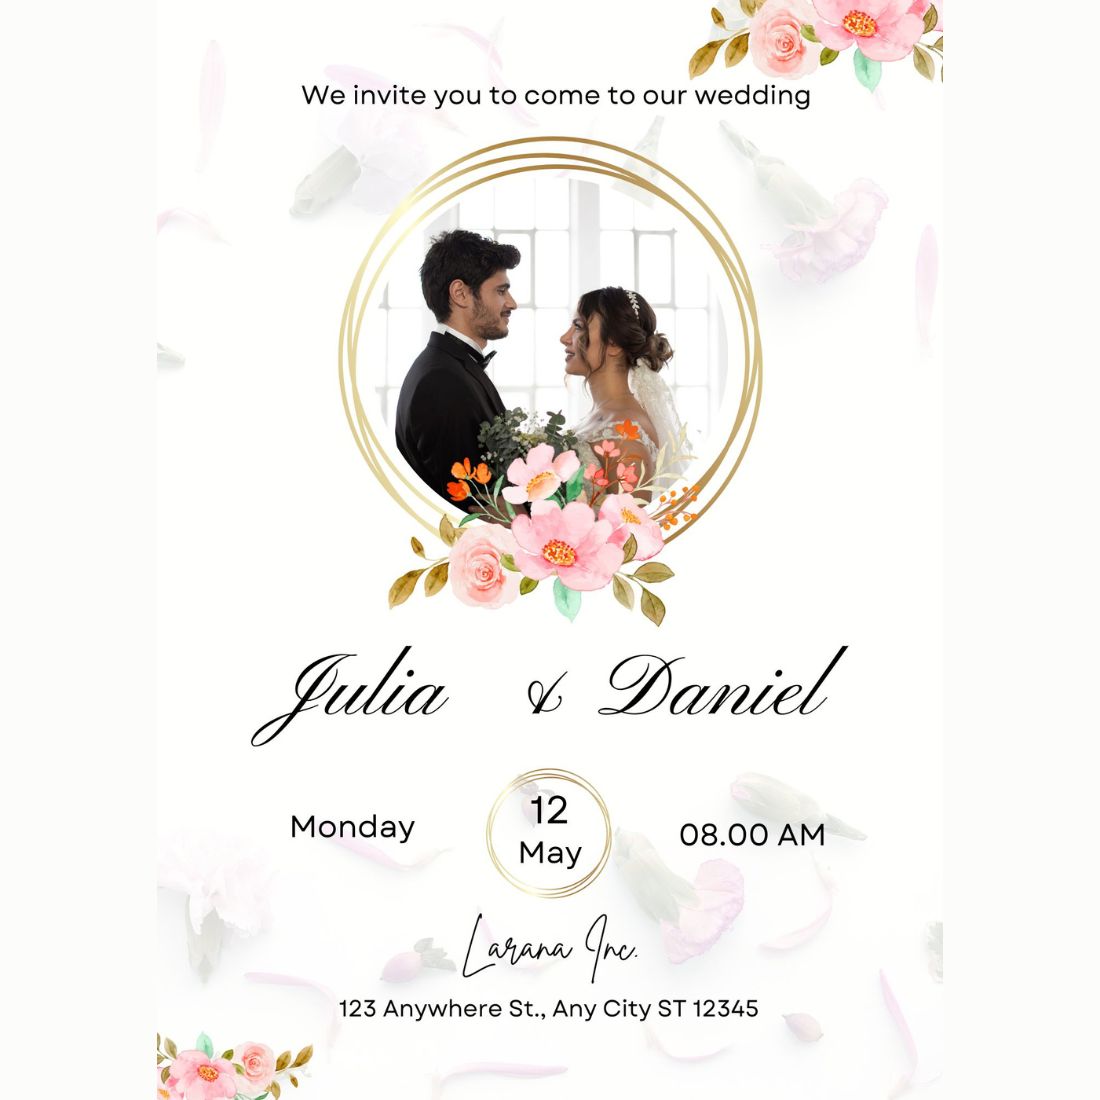 Modern Minimalist Design Wedding Invitation Template cover image.